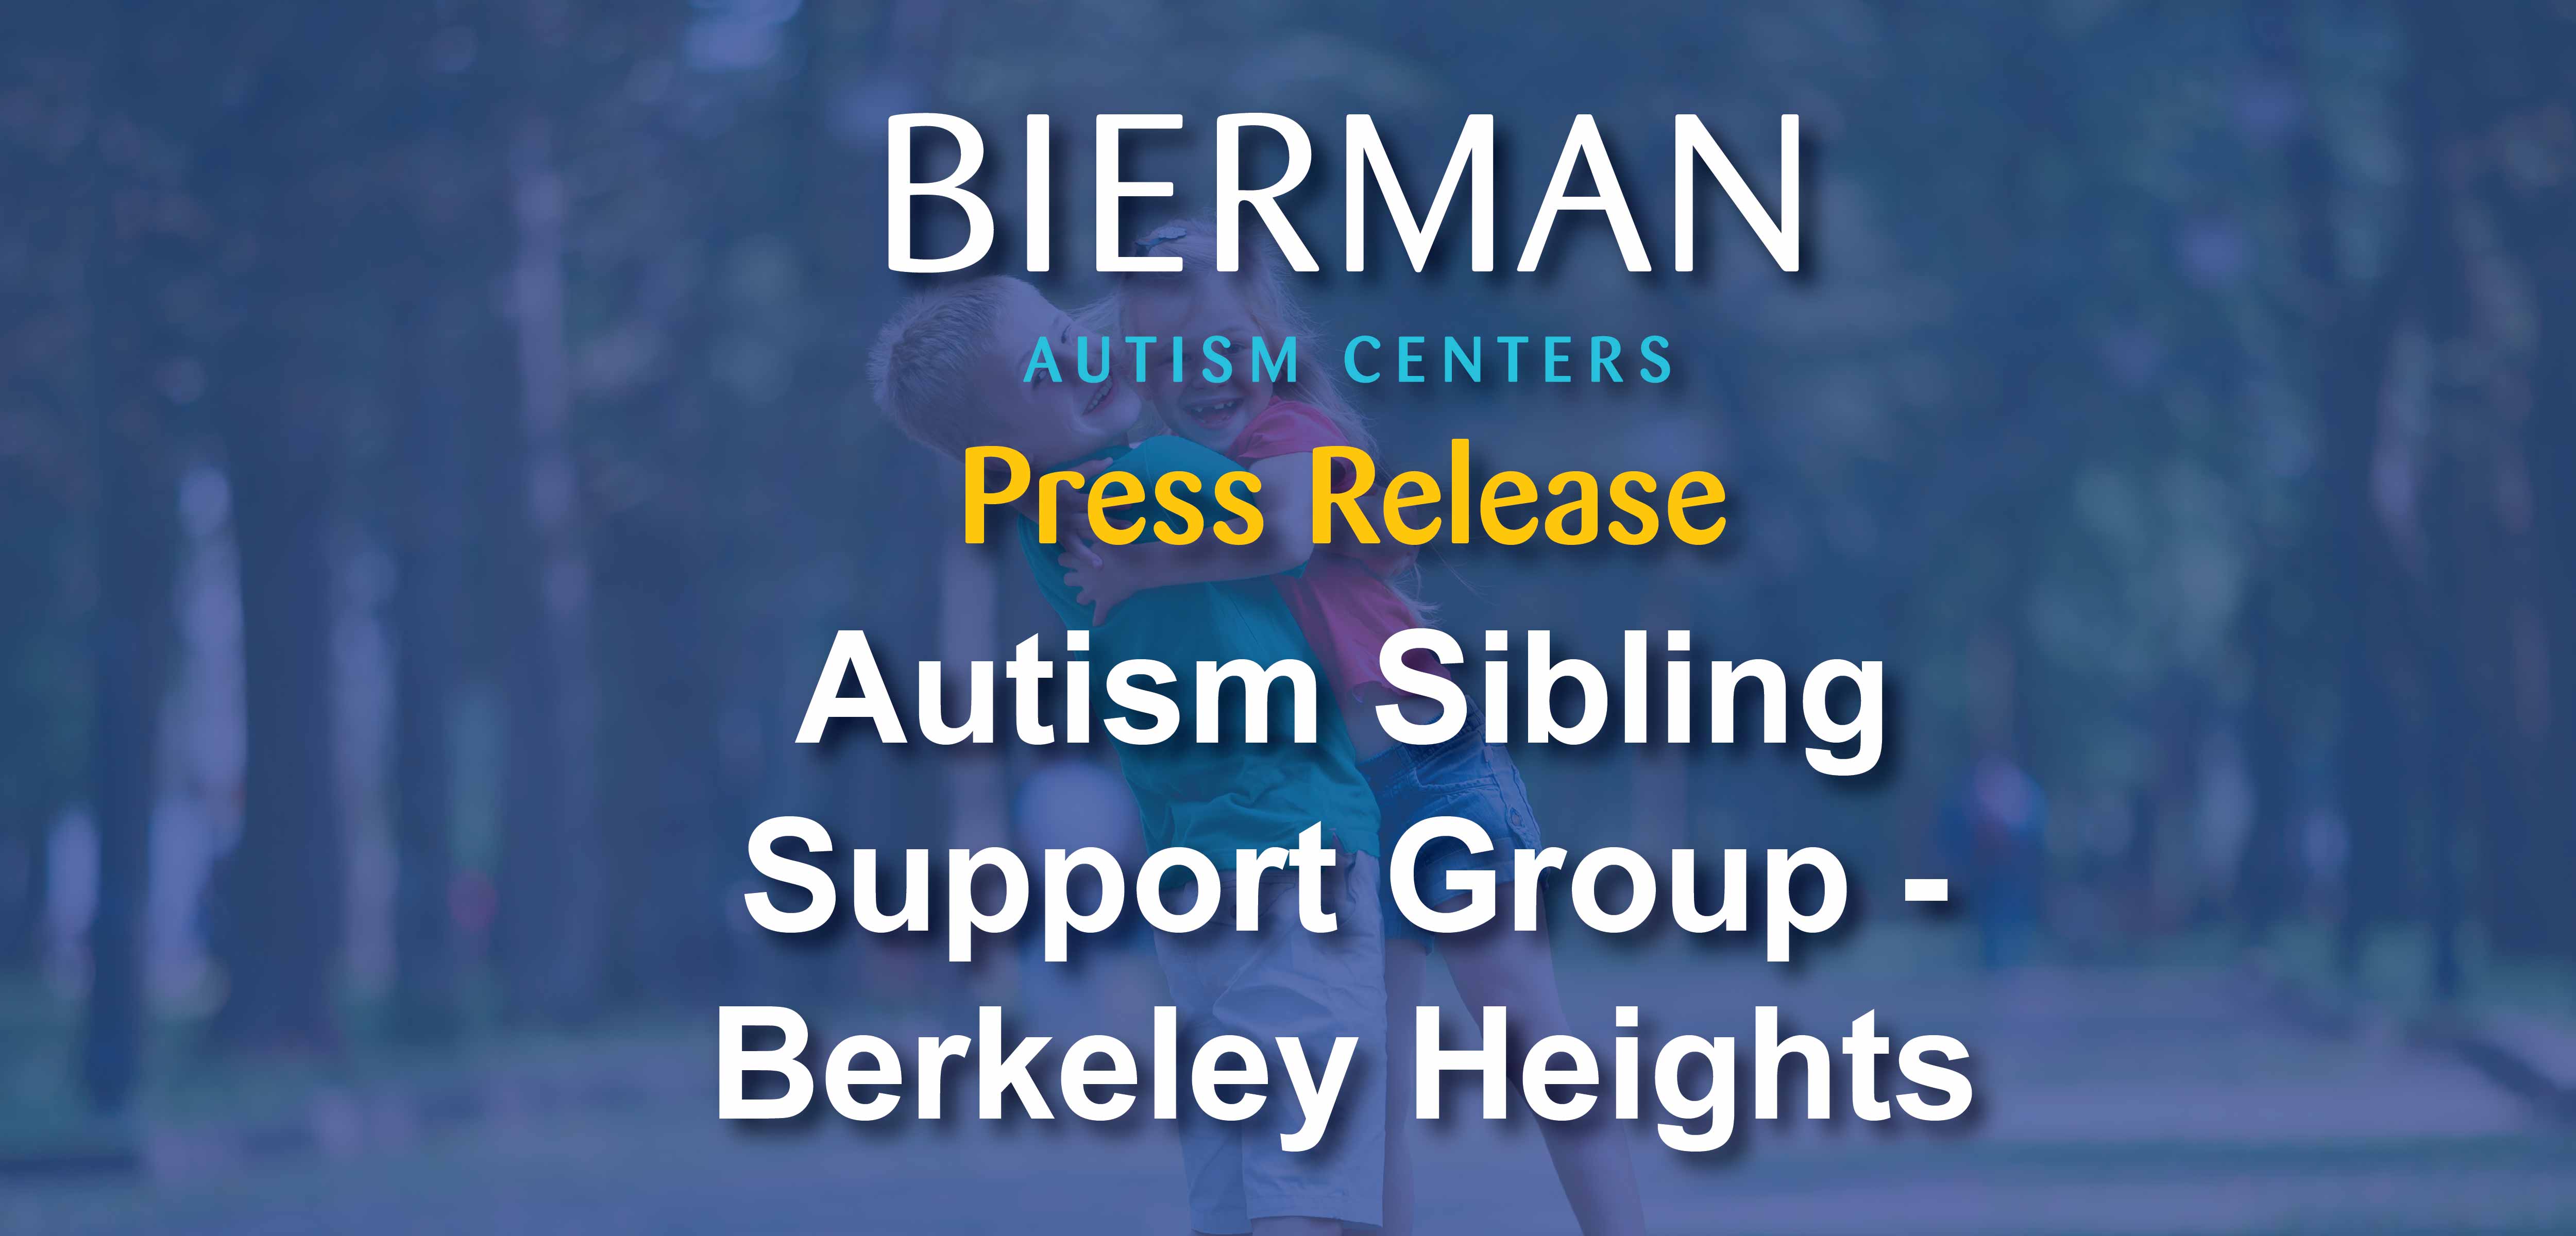 Autism Sibling Support Group in Berkeley Heights, NJ